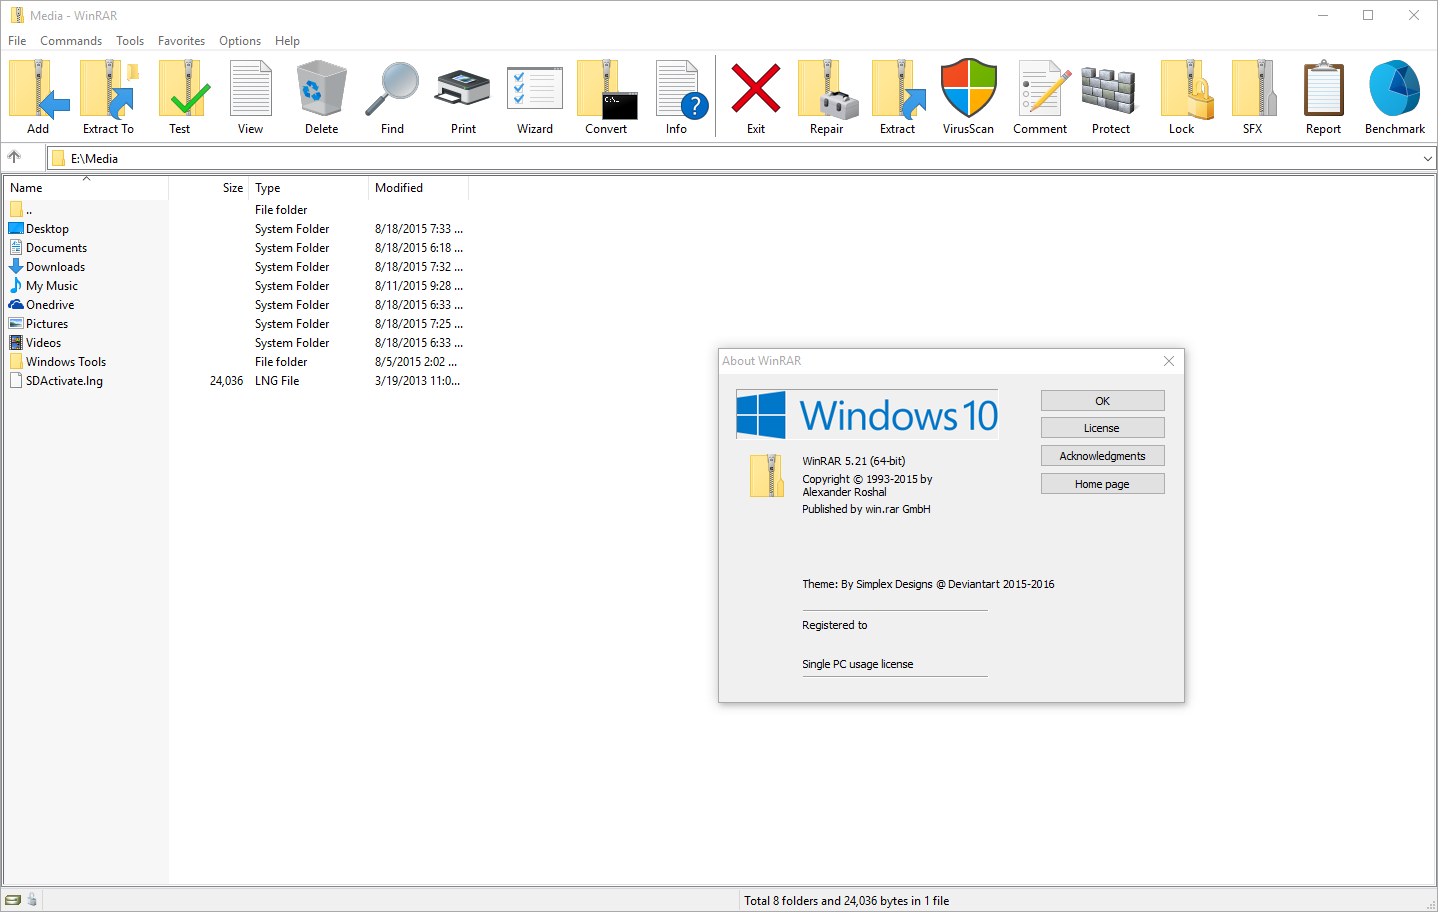 winrar for windows 10 64 bit download